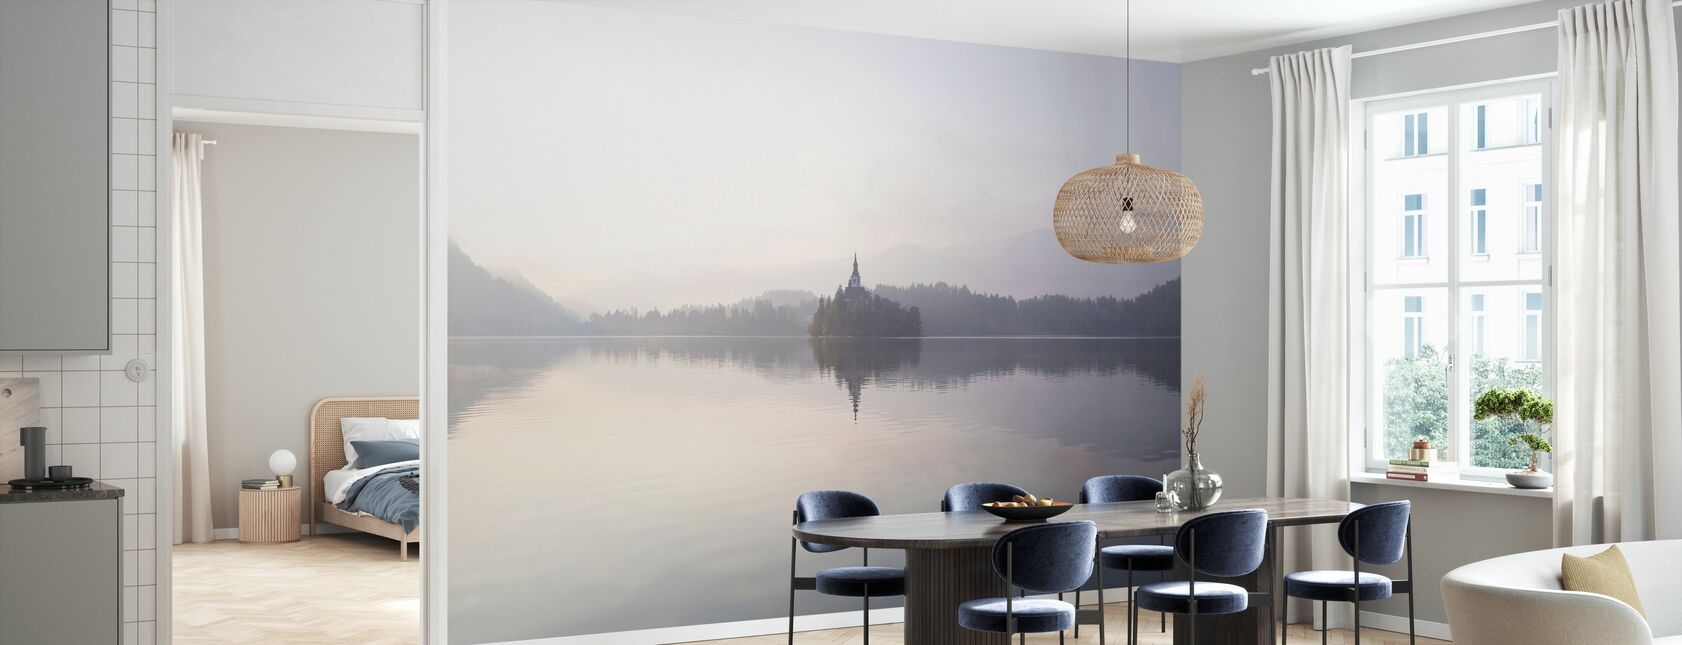 Lake Bled at Sunrise - Wallpaper - Kitchen